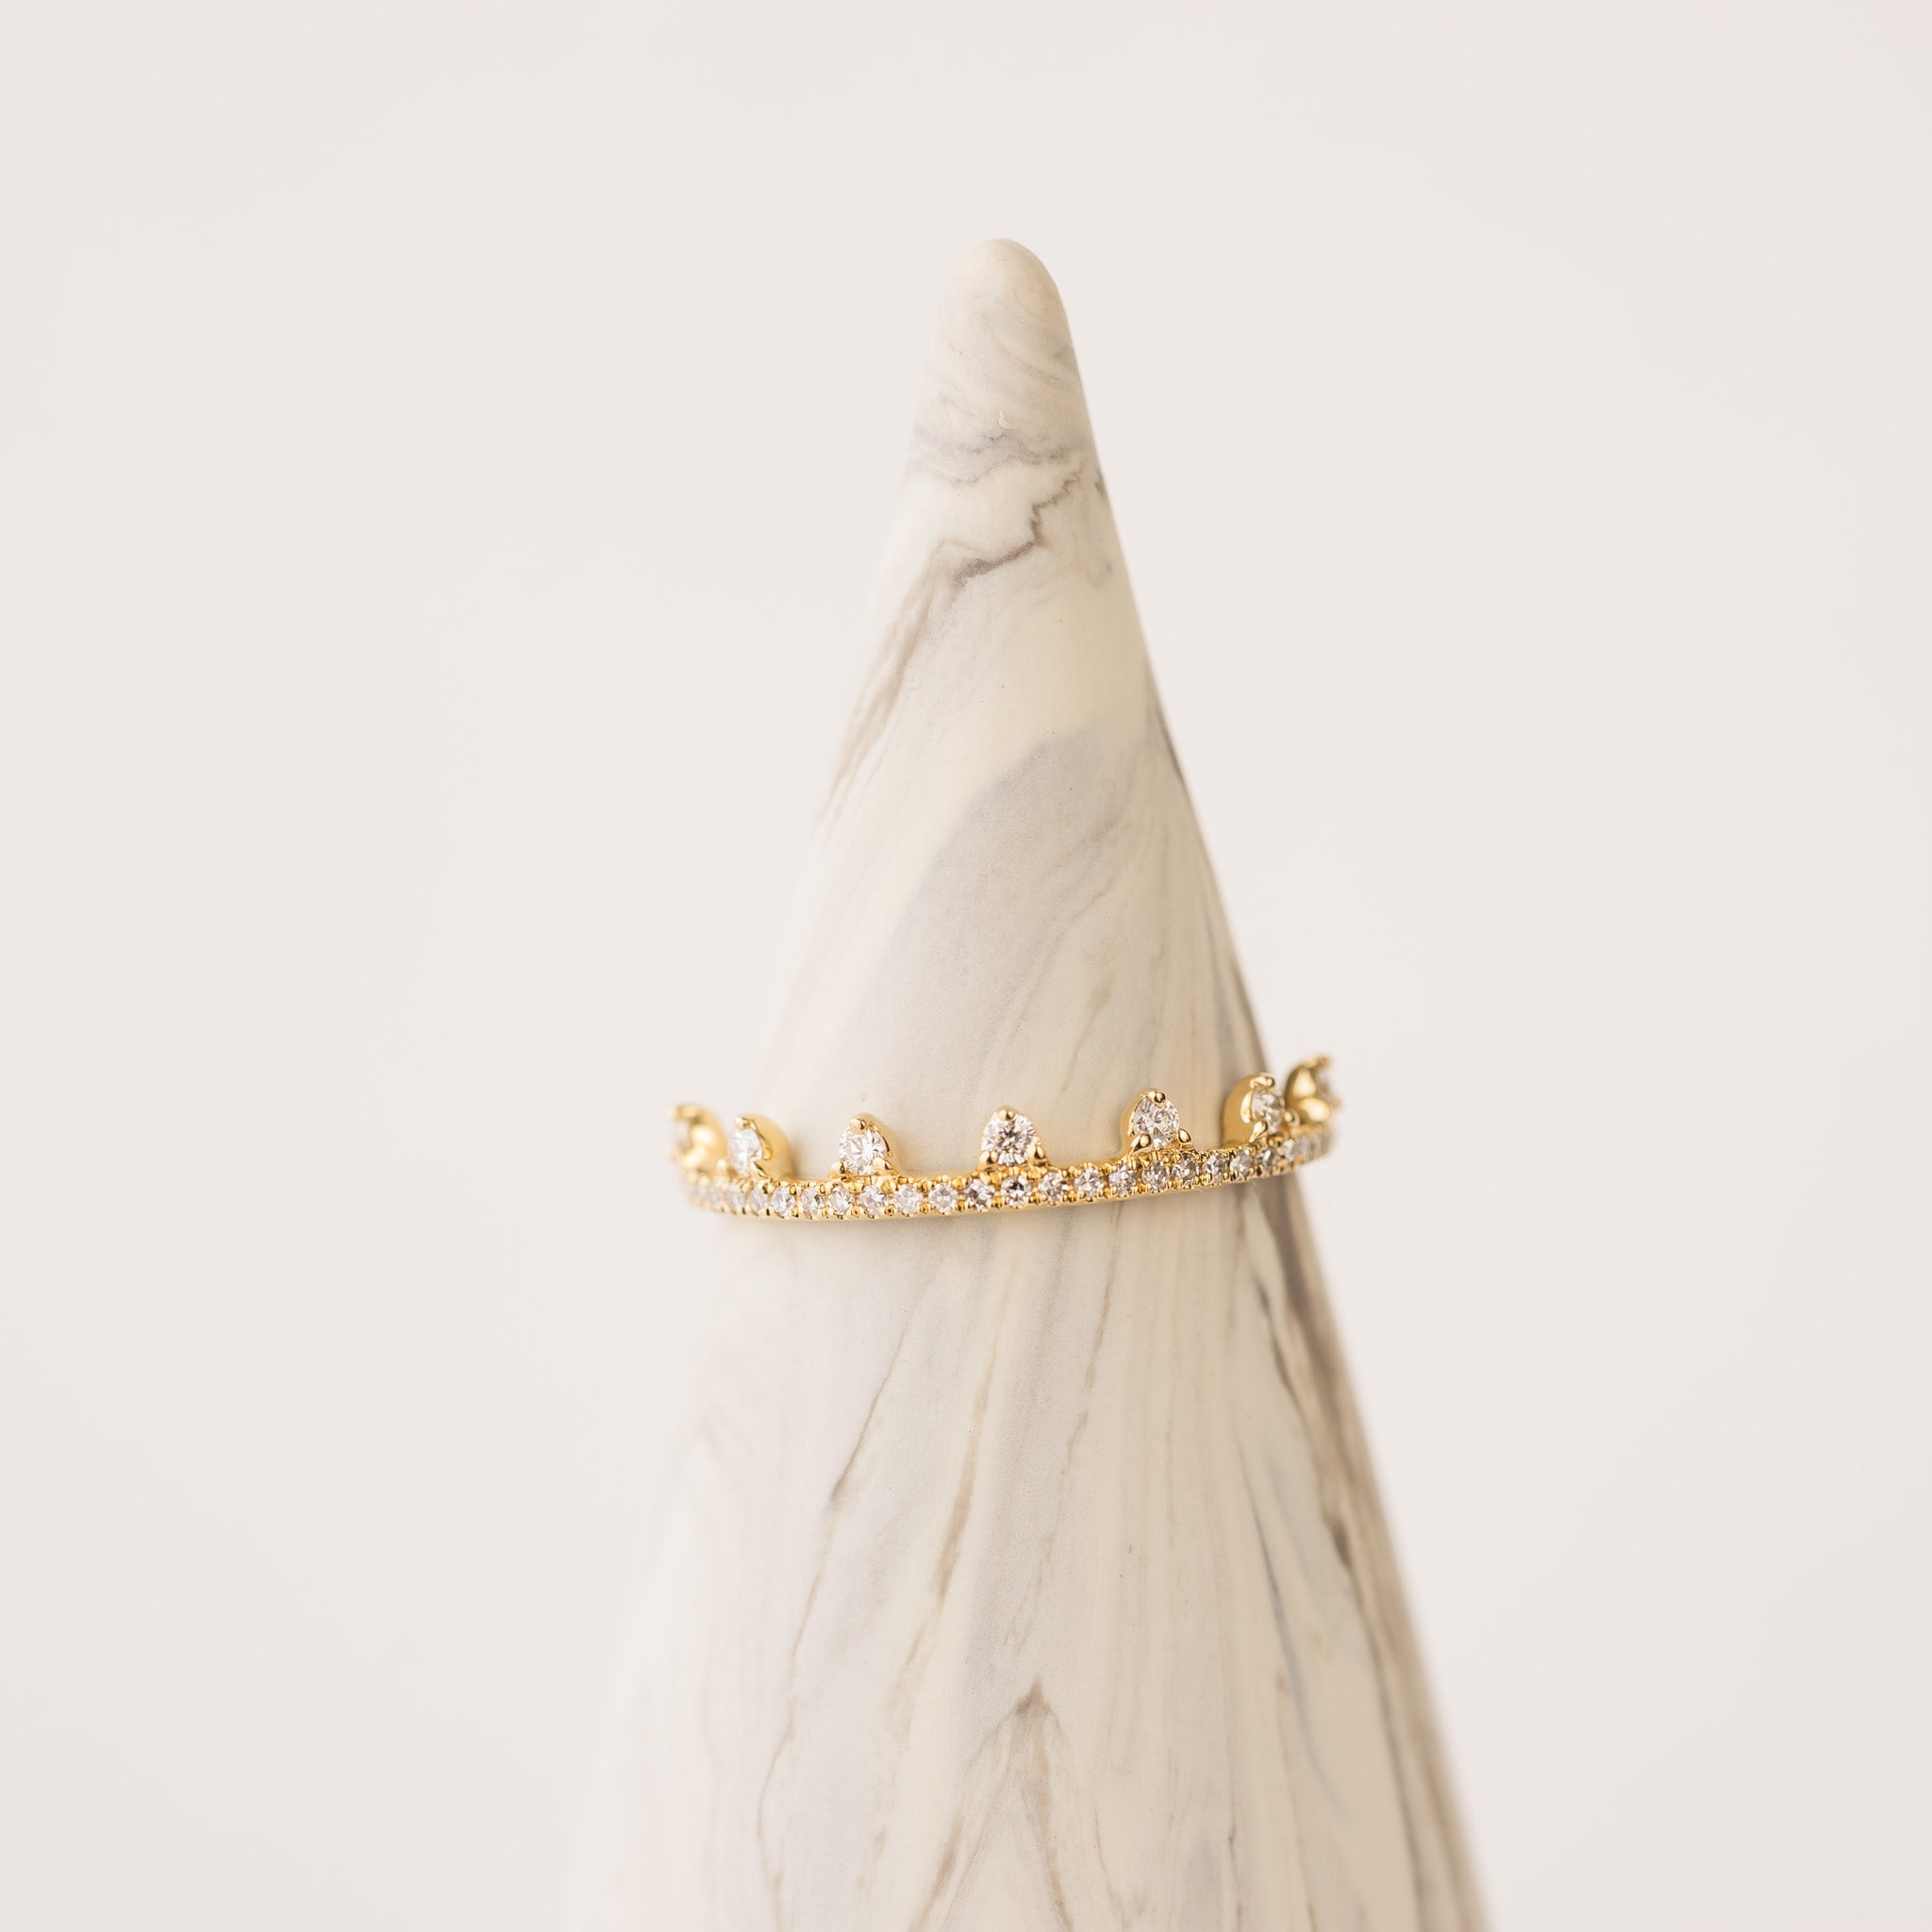 Eva Diamond Crown Ring Styled